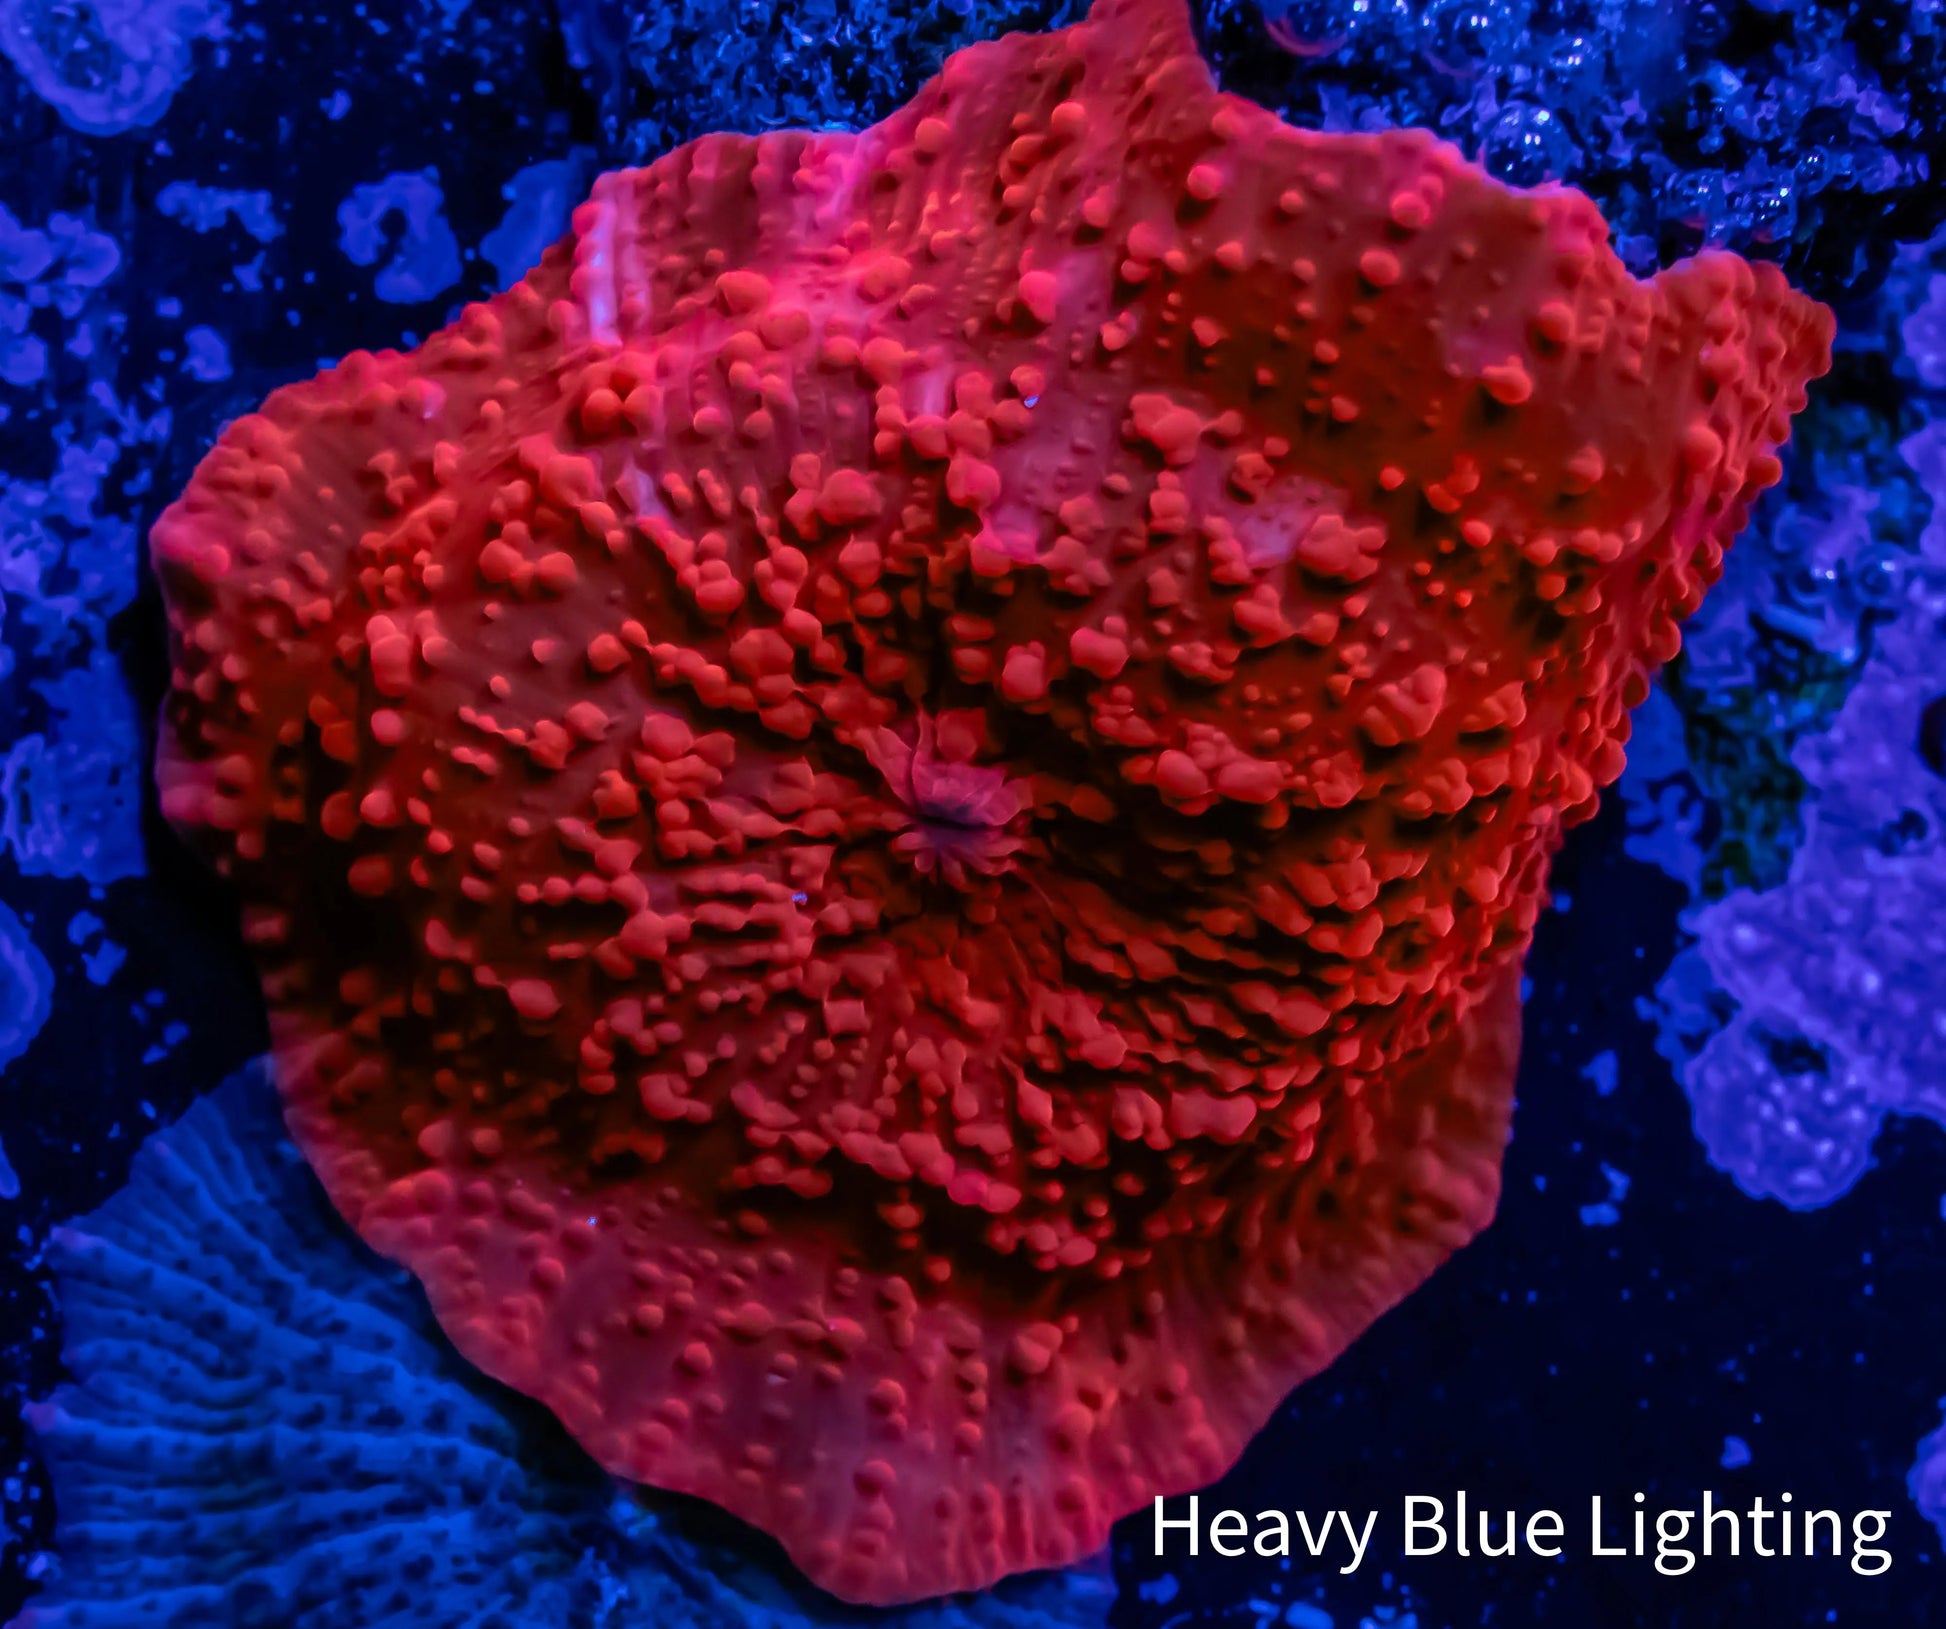 Corellamorph - Red Morph Coral WYSIWYG 1.5cm Corellamorph - Red Morph Coral WYSIWYG 1.5cm Animals & Pet Supplies Corellamorph - Red Morph Coral WYSIWYG 1.5cm Zeo Box Reef